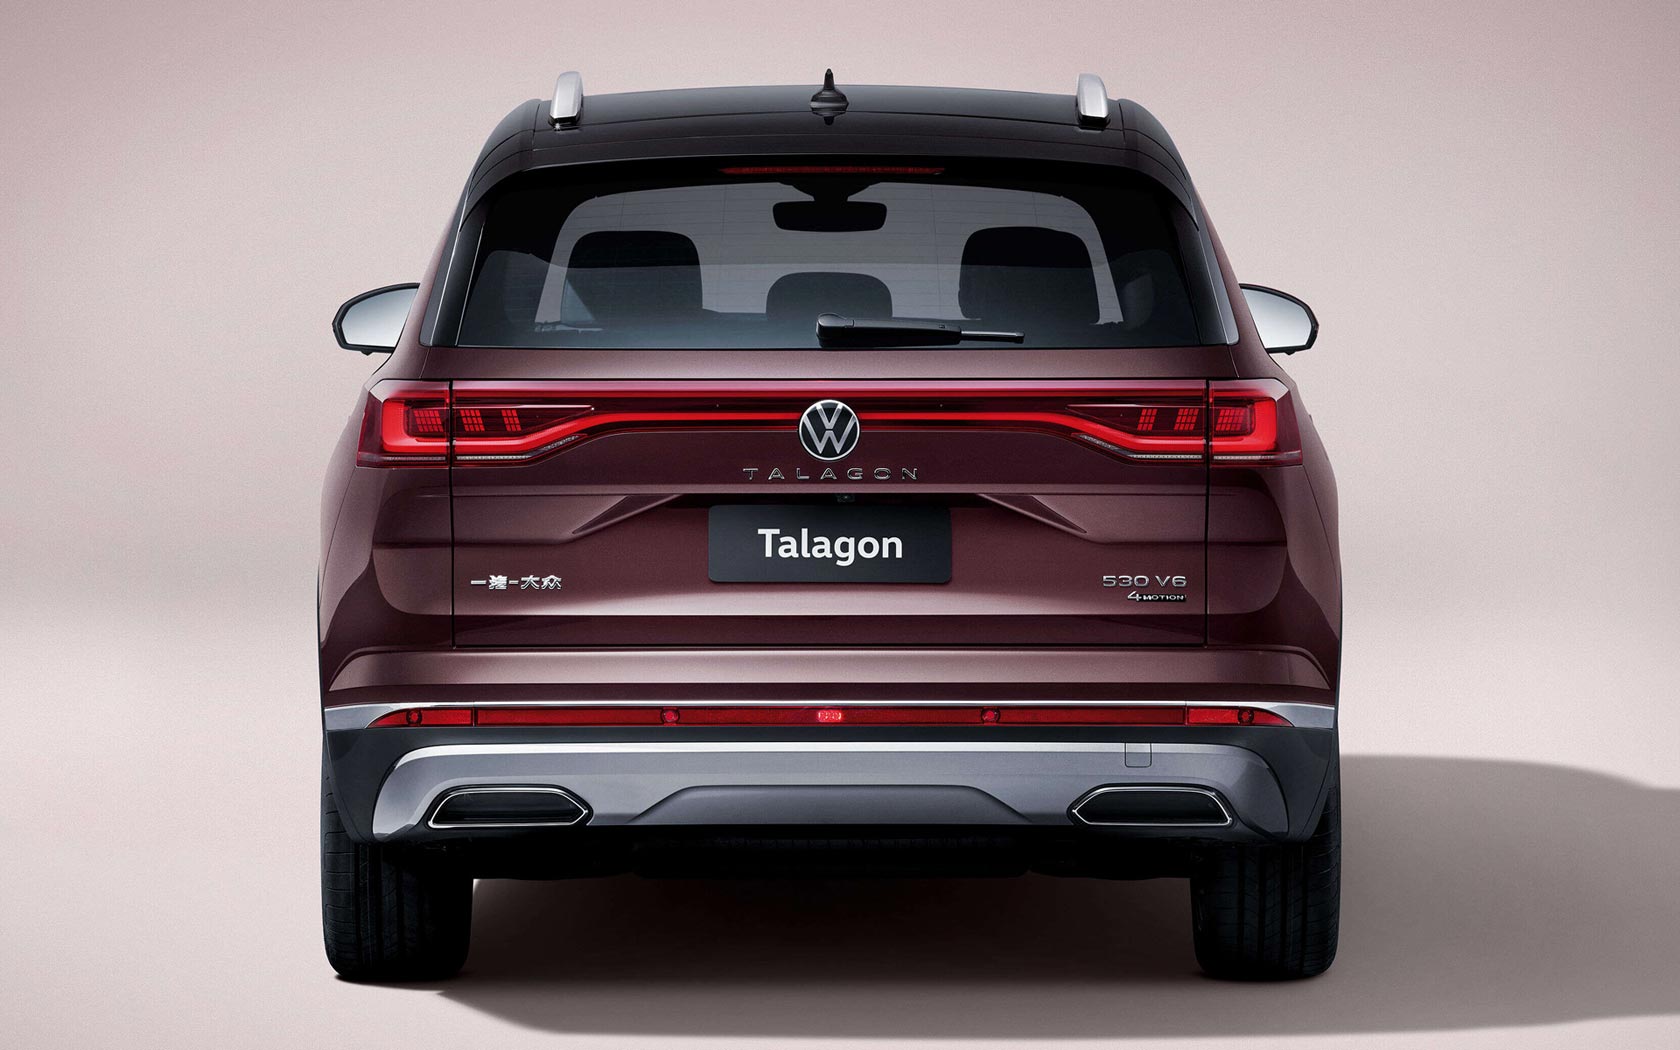  Volkswagen Talagon 